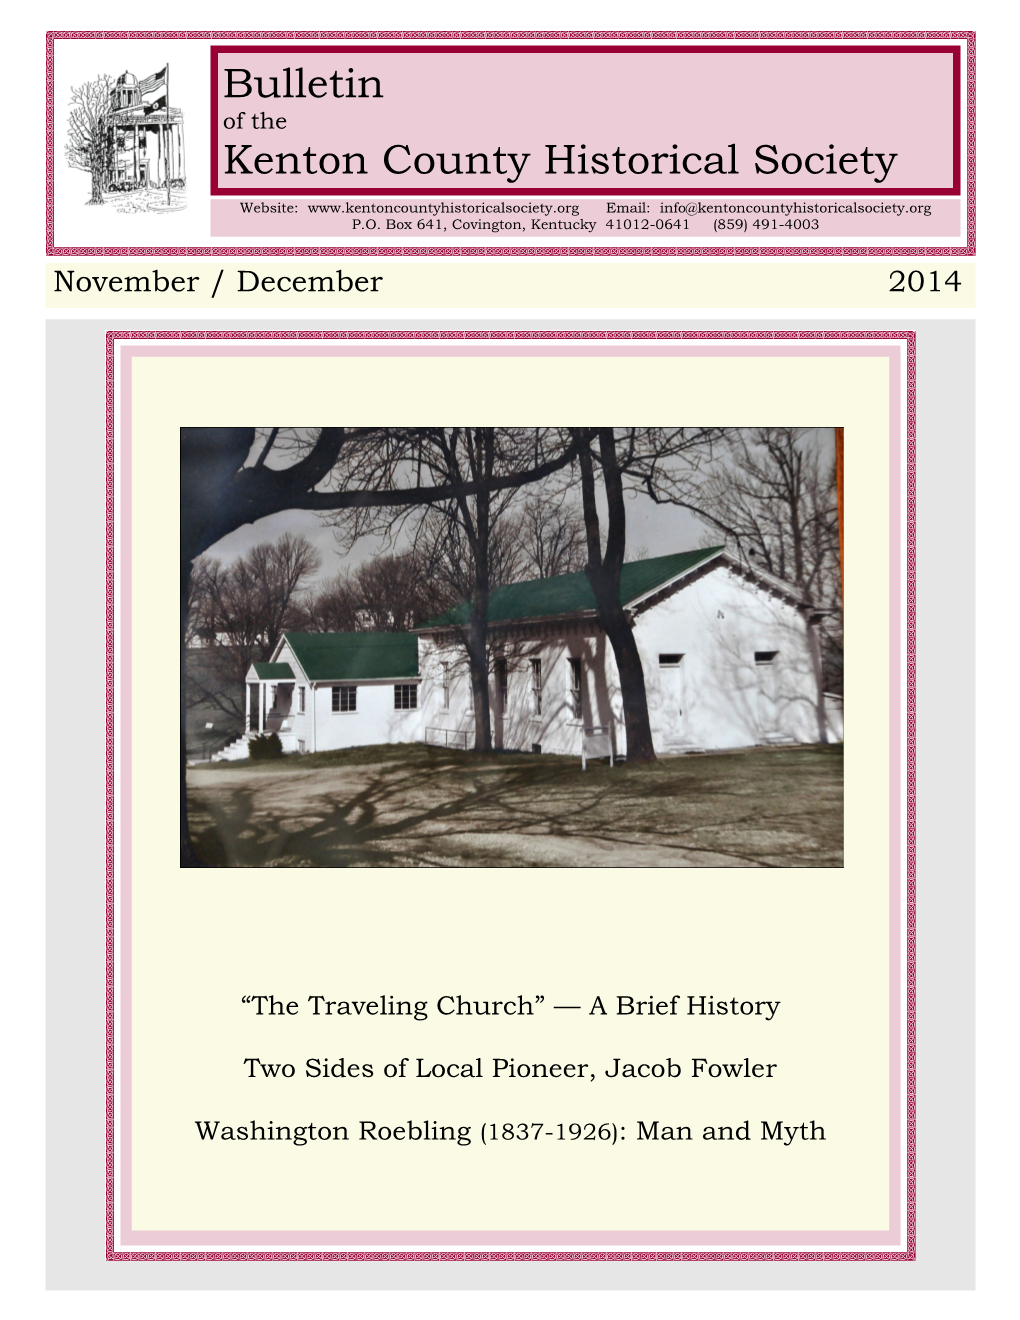 Washington Roebling (1837-1926): Man and Myth “The Traveling Church” - a Brief History